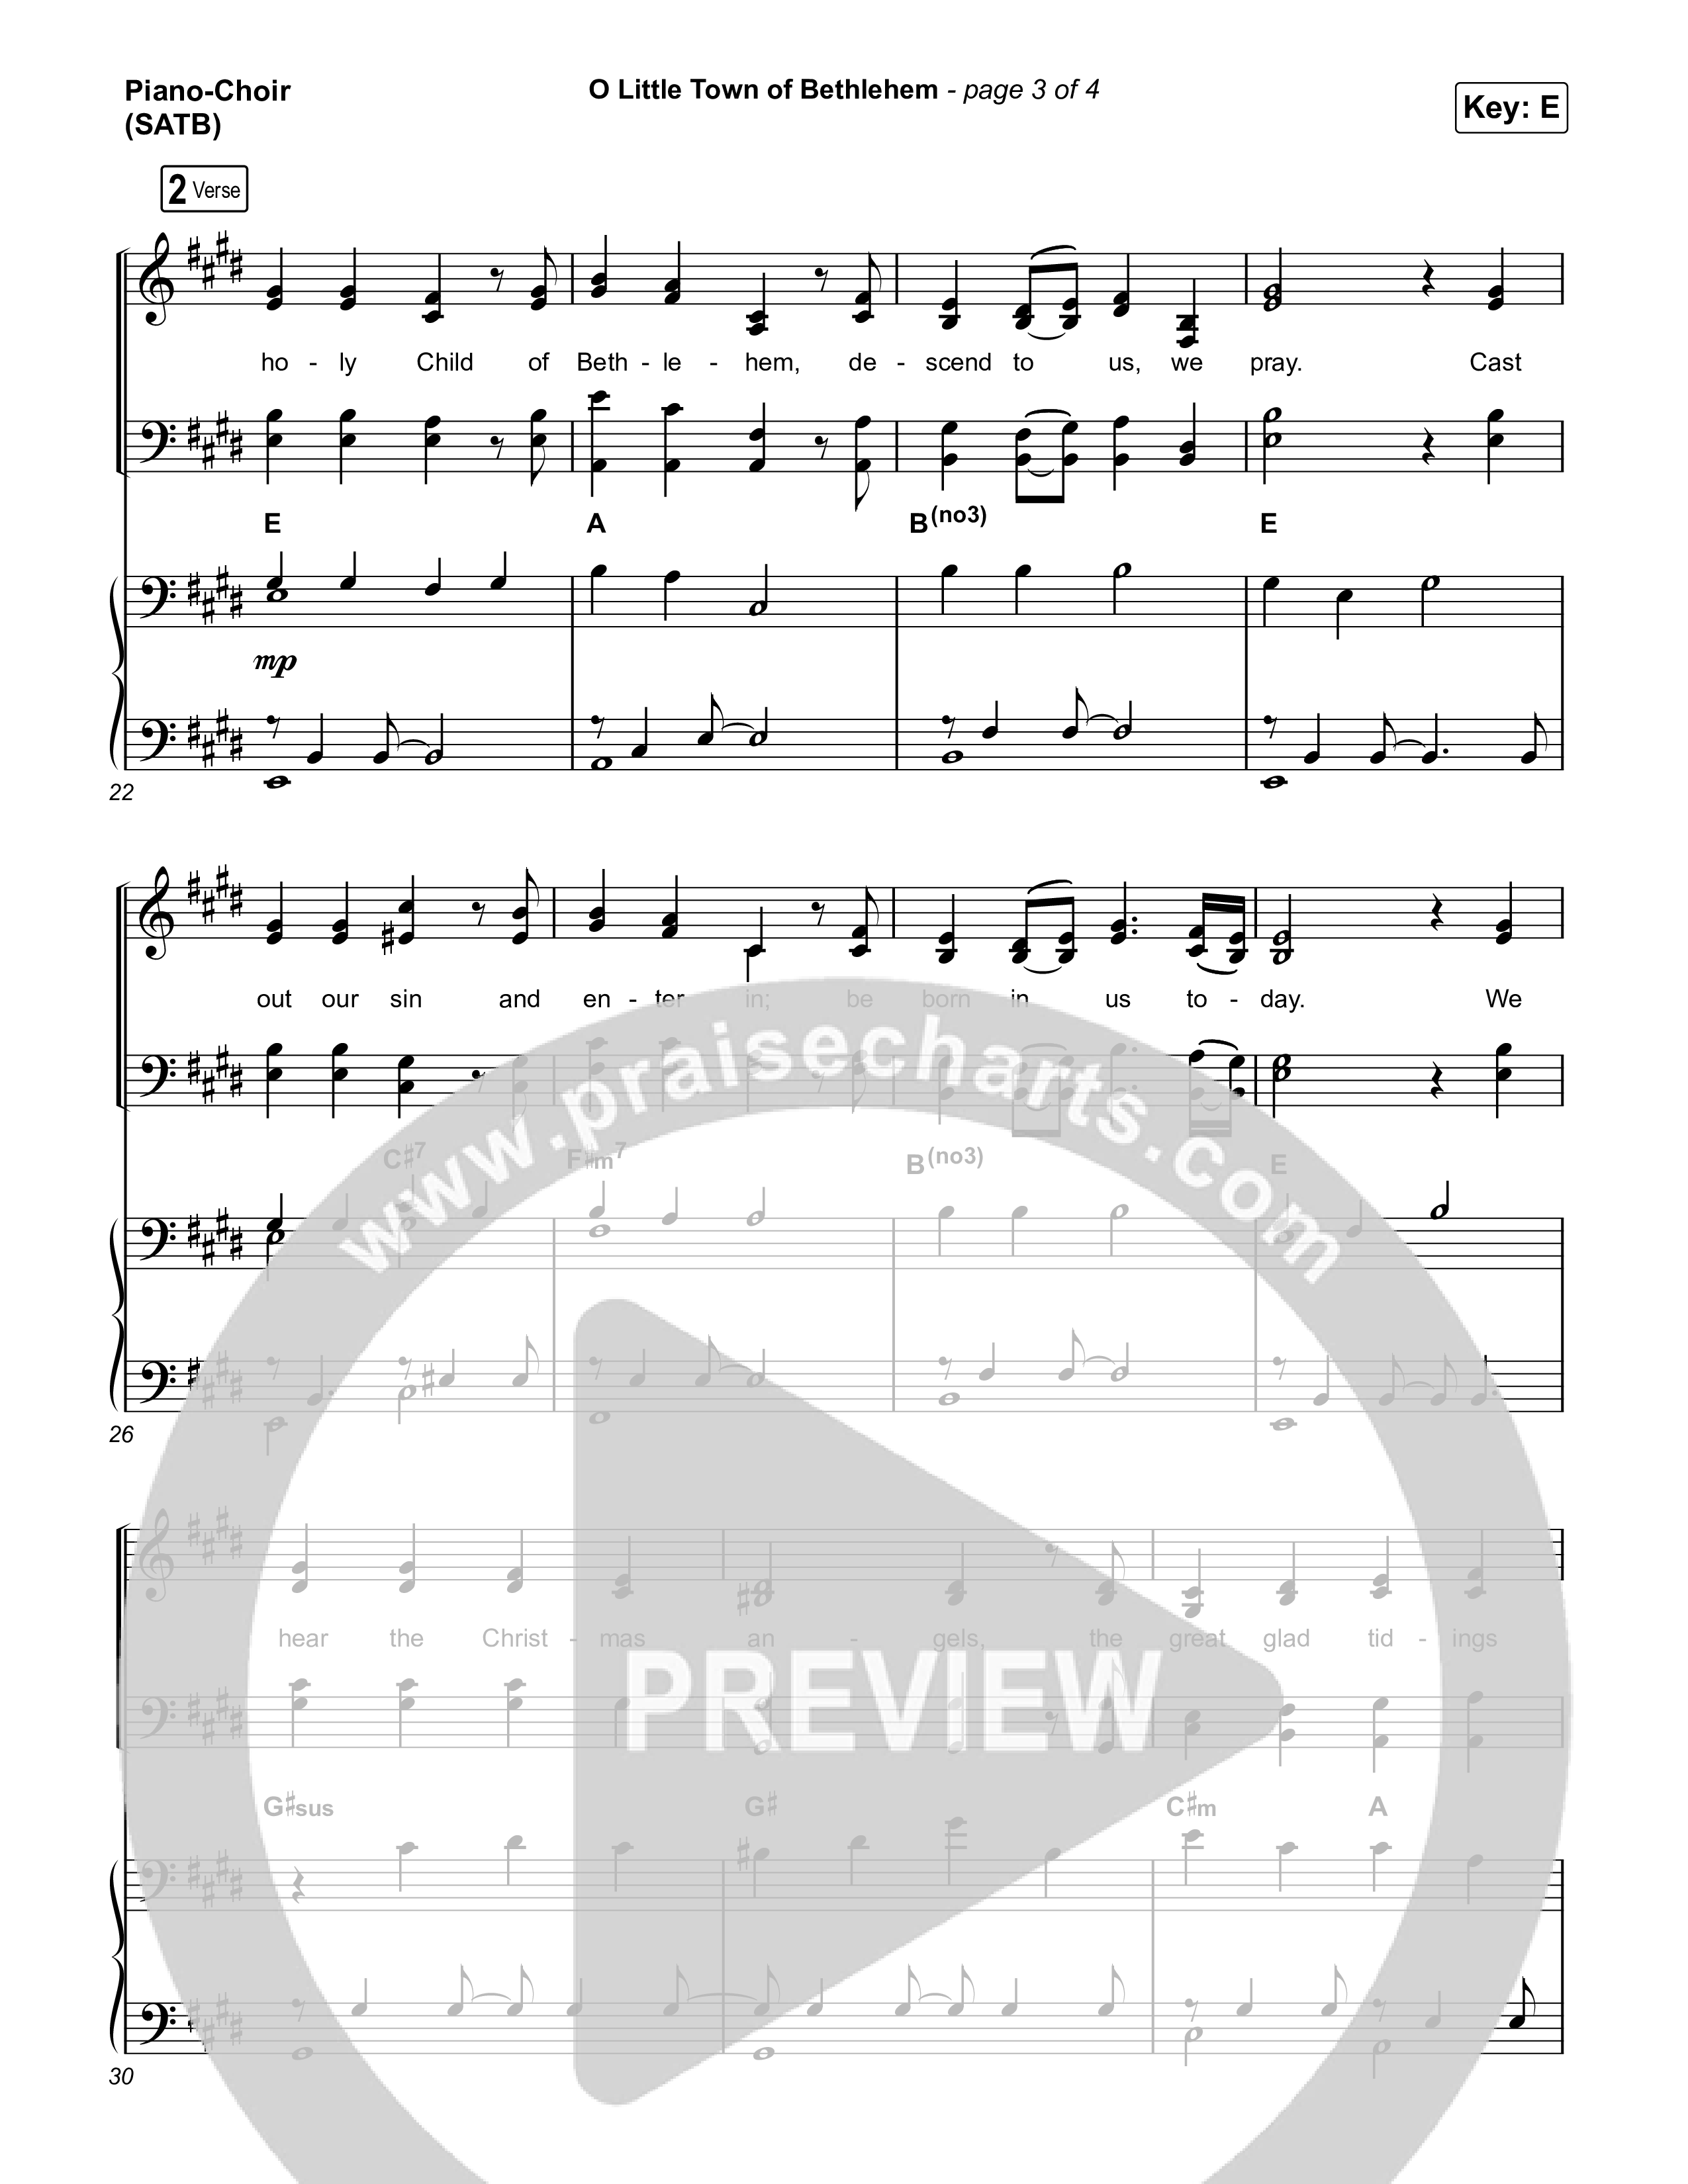 O Little Town of Bethlehem Piano/Vocal (SATB) (Elevation Worship / Jonsal Barrientes)